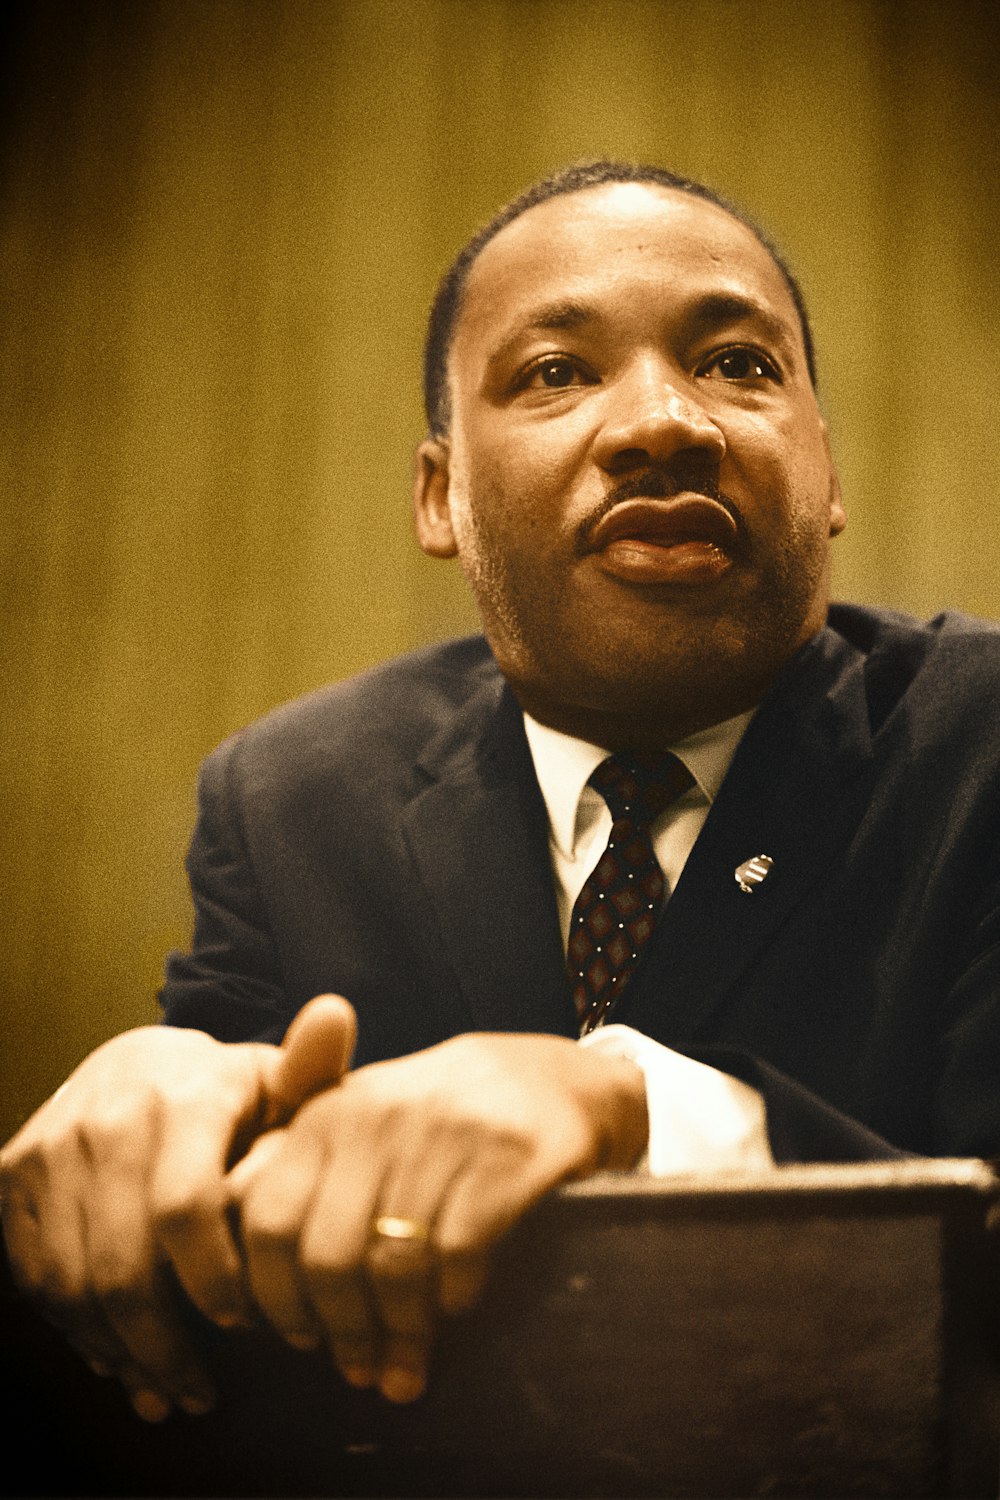 Dr. Martin Luther King, Jr. gives a speech